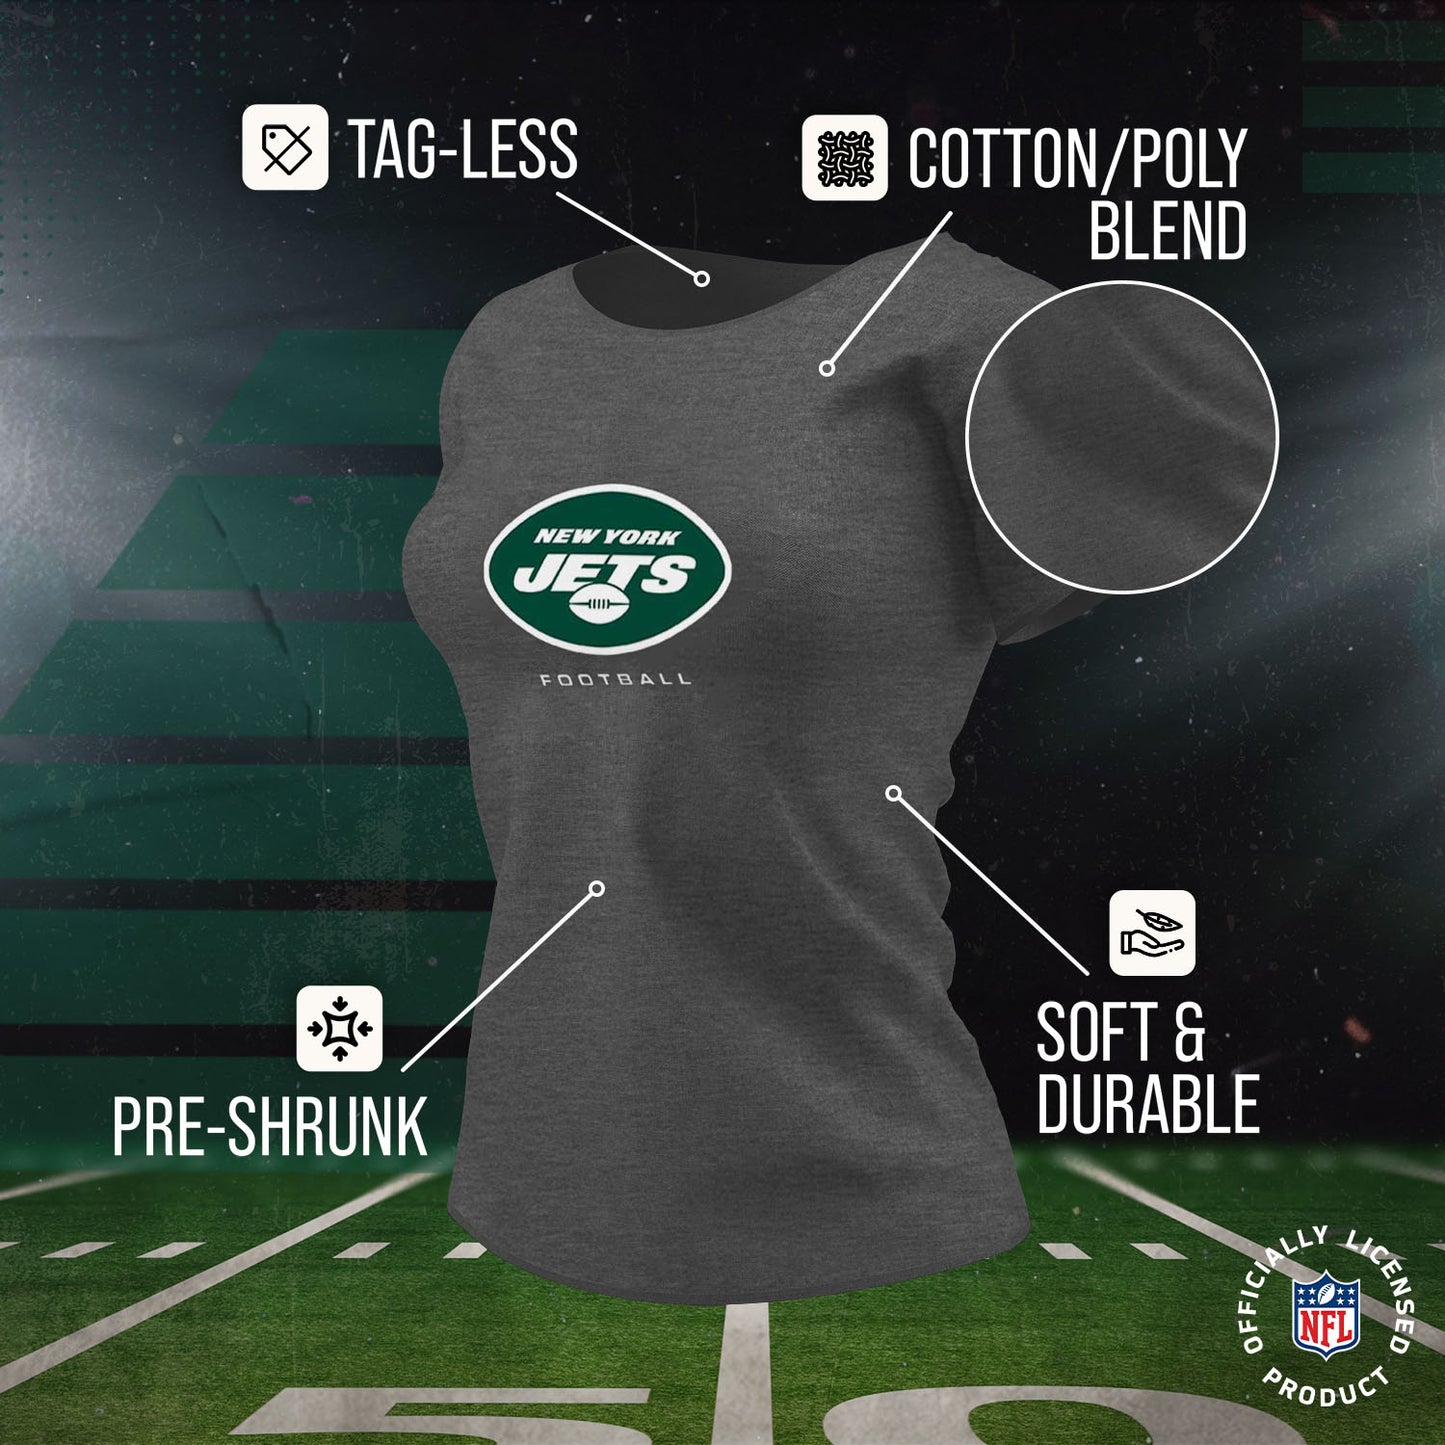 New York Jets Women's NFL Ultimate Fan Logo Short Sleeve T-Shirt - Charcoal